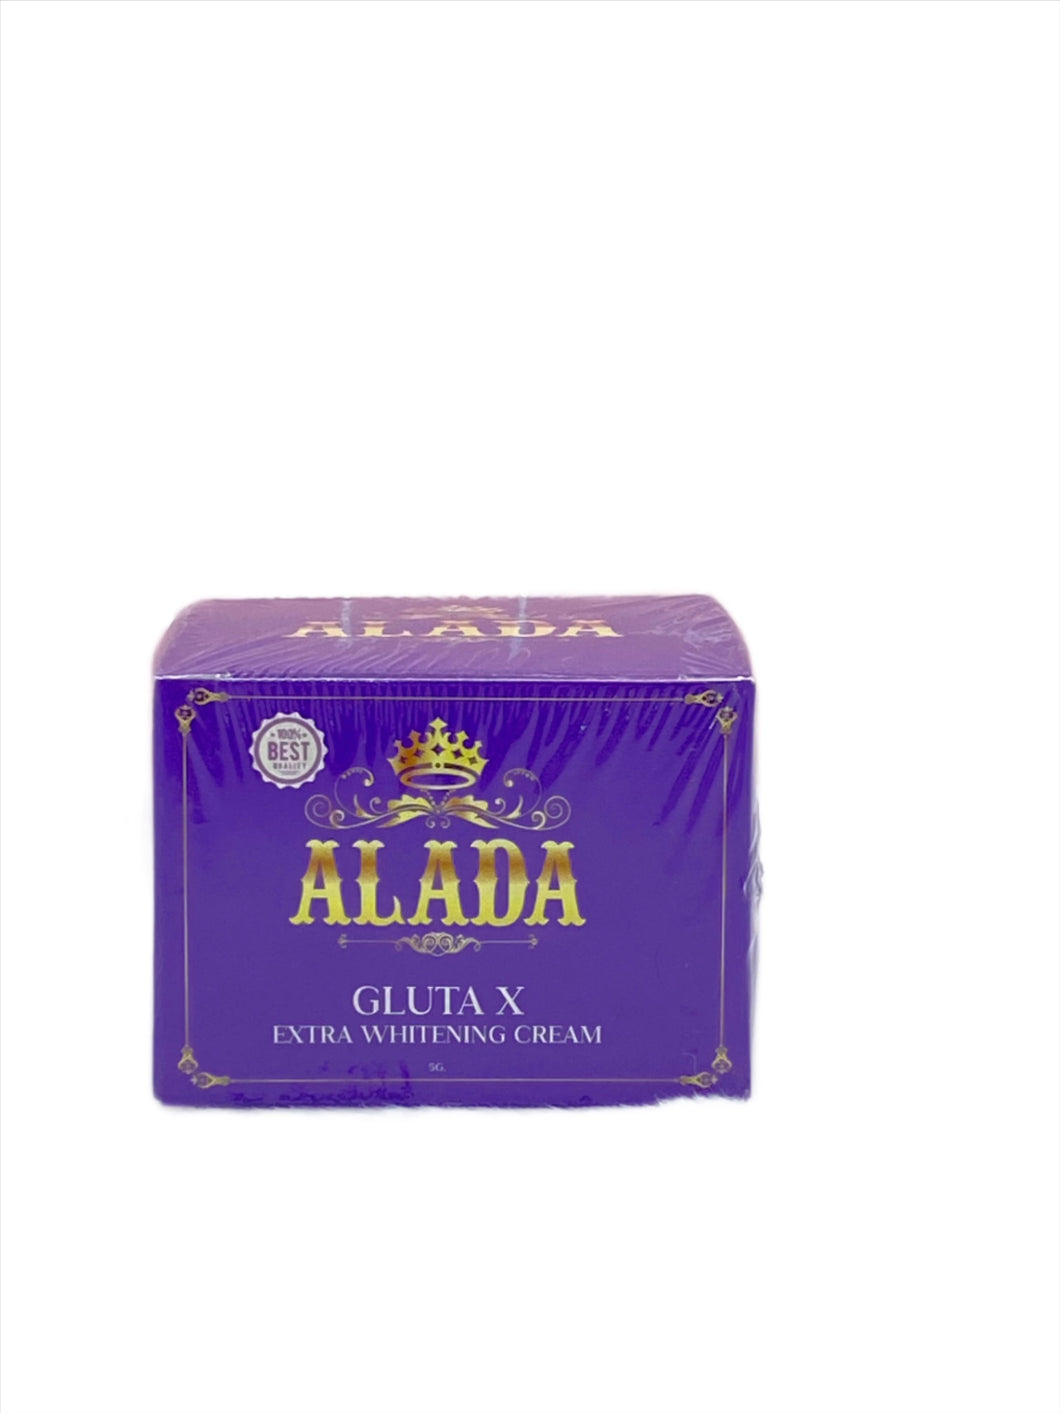 Alada Glutax Extra Whitening Cream 5g